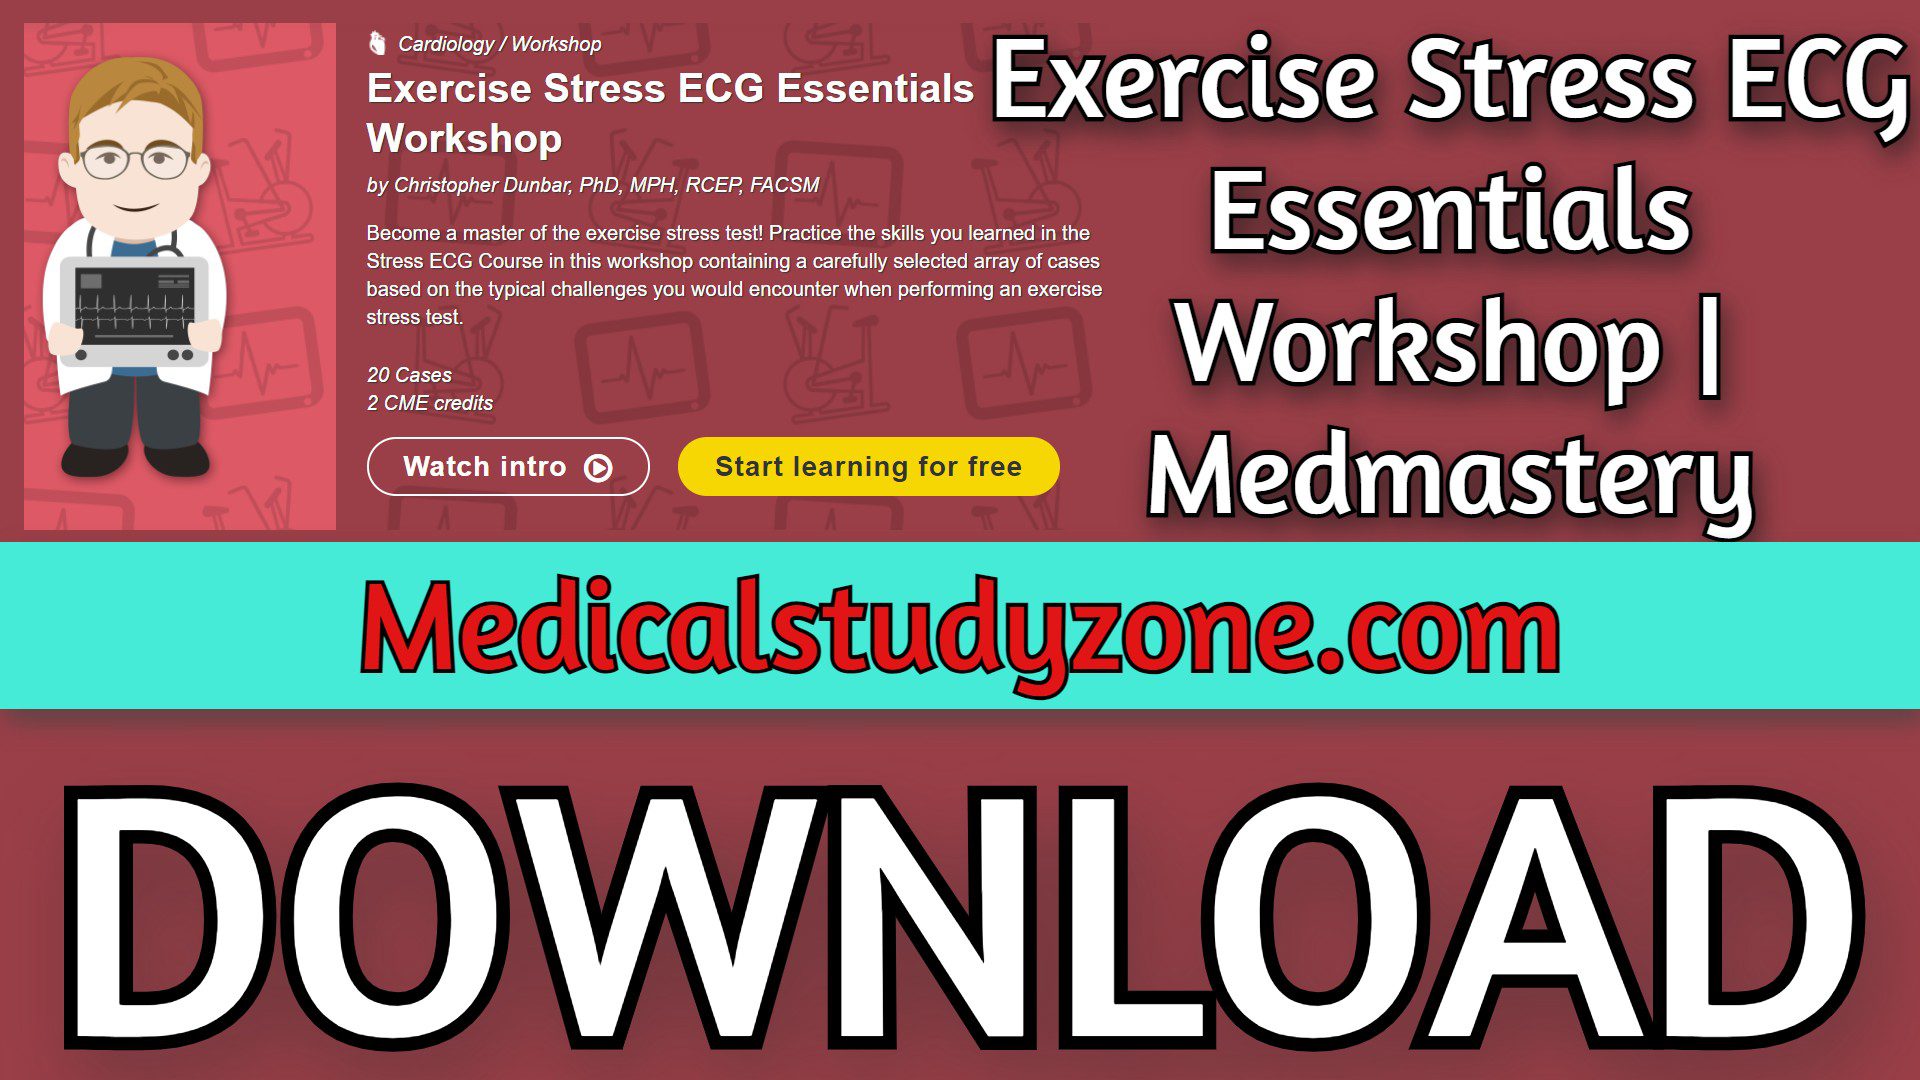 Exercise Stress ECG Essentials Workshop | Medmastery 2021 Videos Free Download